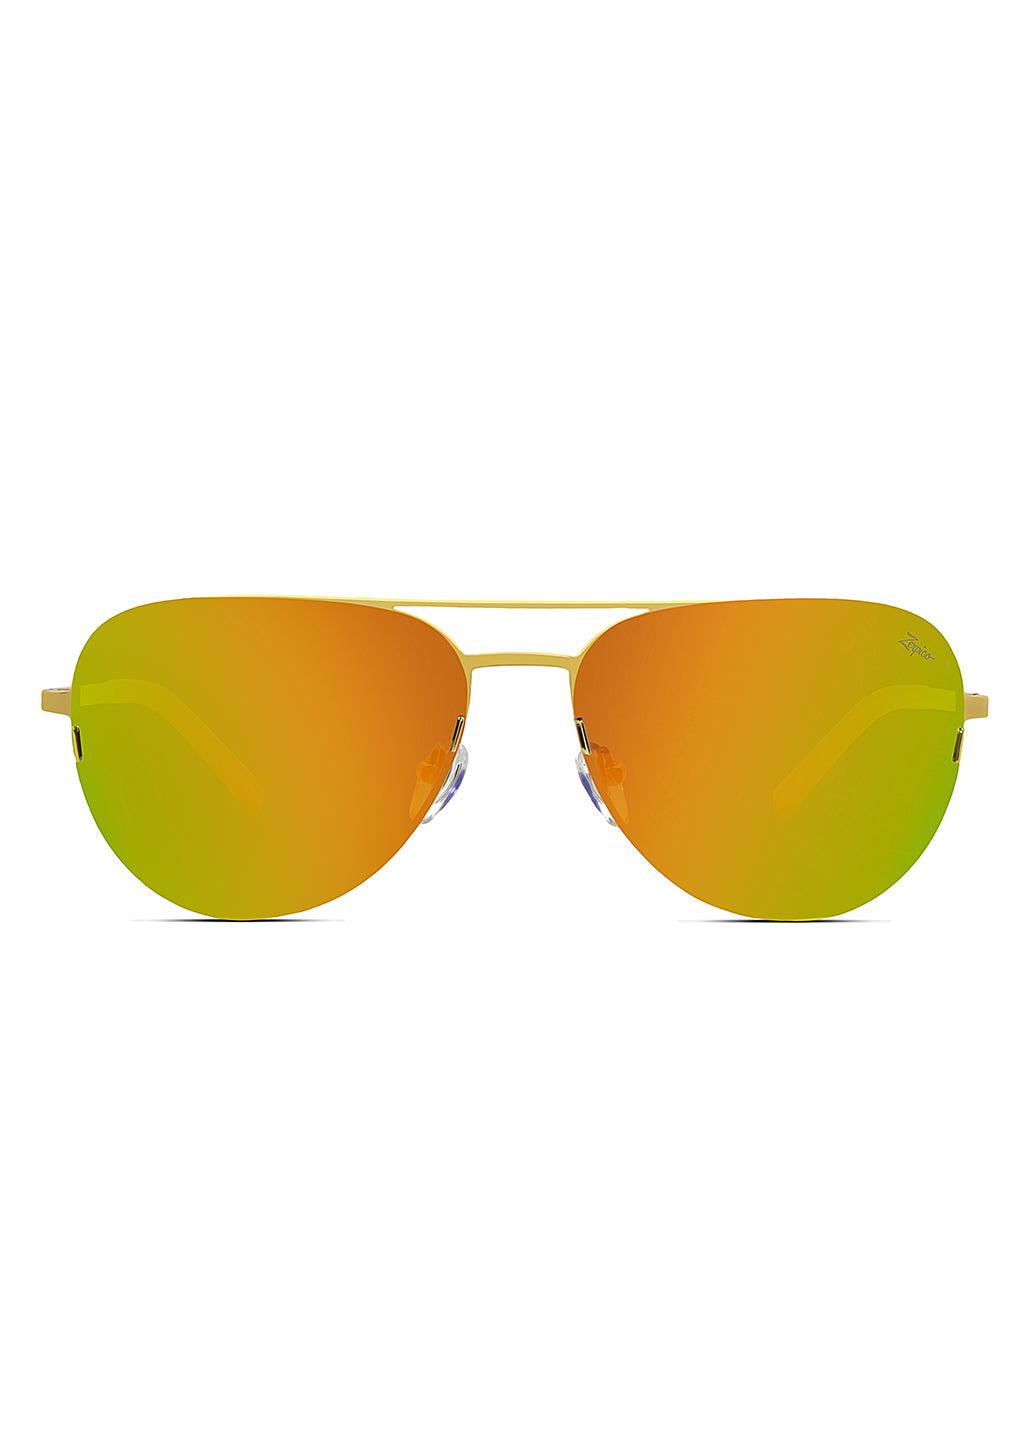 Titanium Aviator Sunglasses - V2 - 24K GOLD Plated-1